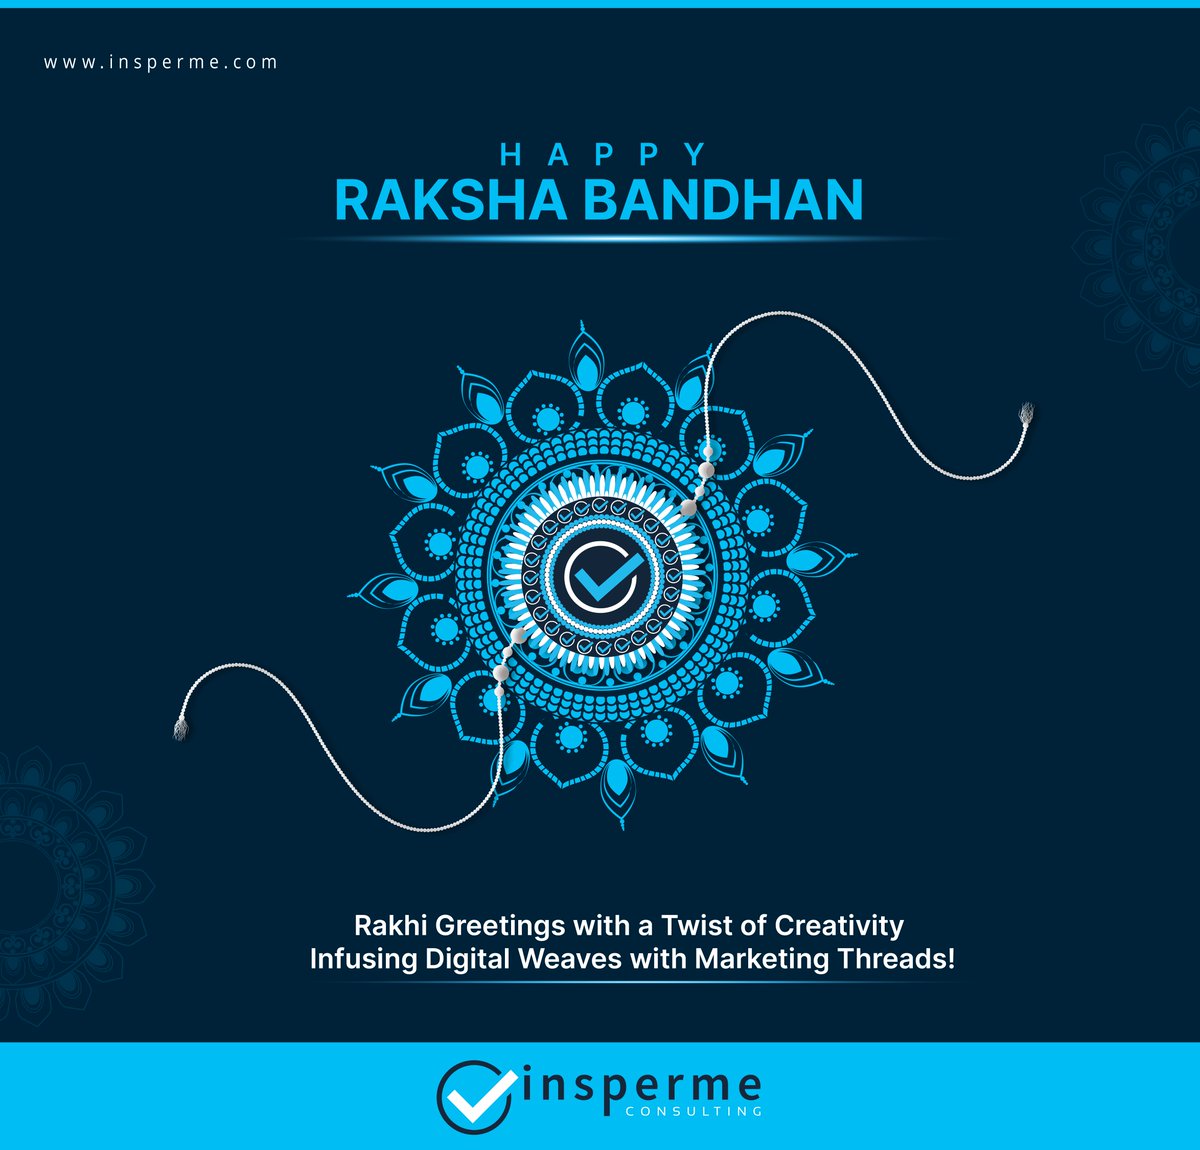 This Raksha Bandhan, let's tie a thread of love as unbreakable as the impact of remarkable digital branding
.
#rakshabandhan #rakhi #inspermeconsulting #growfaster #celebrations #festiveseason #branding #marketing #digital